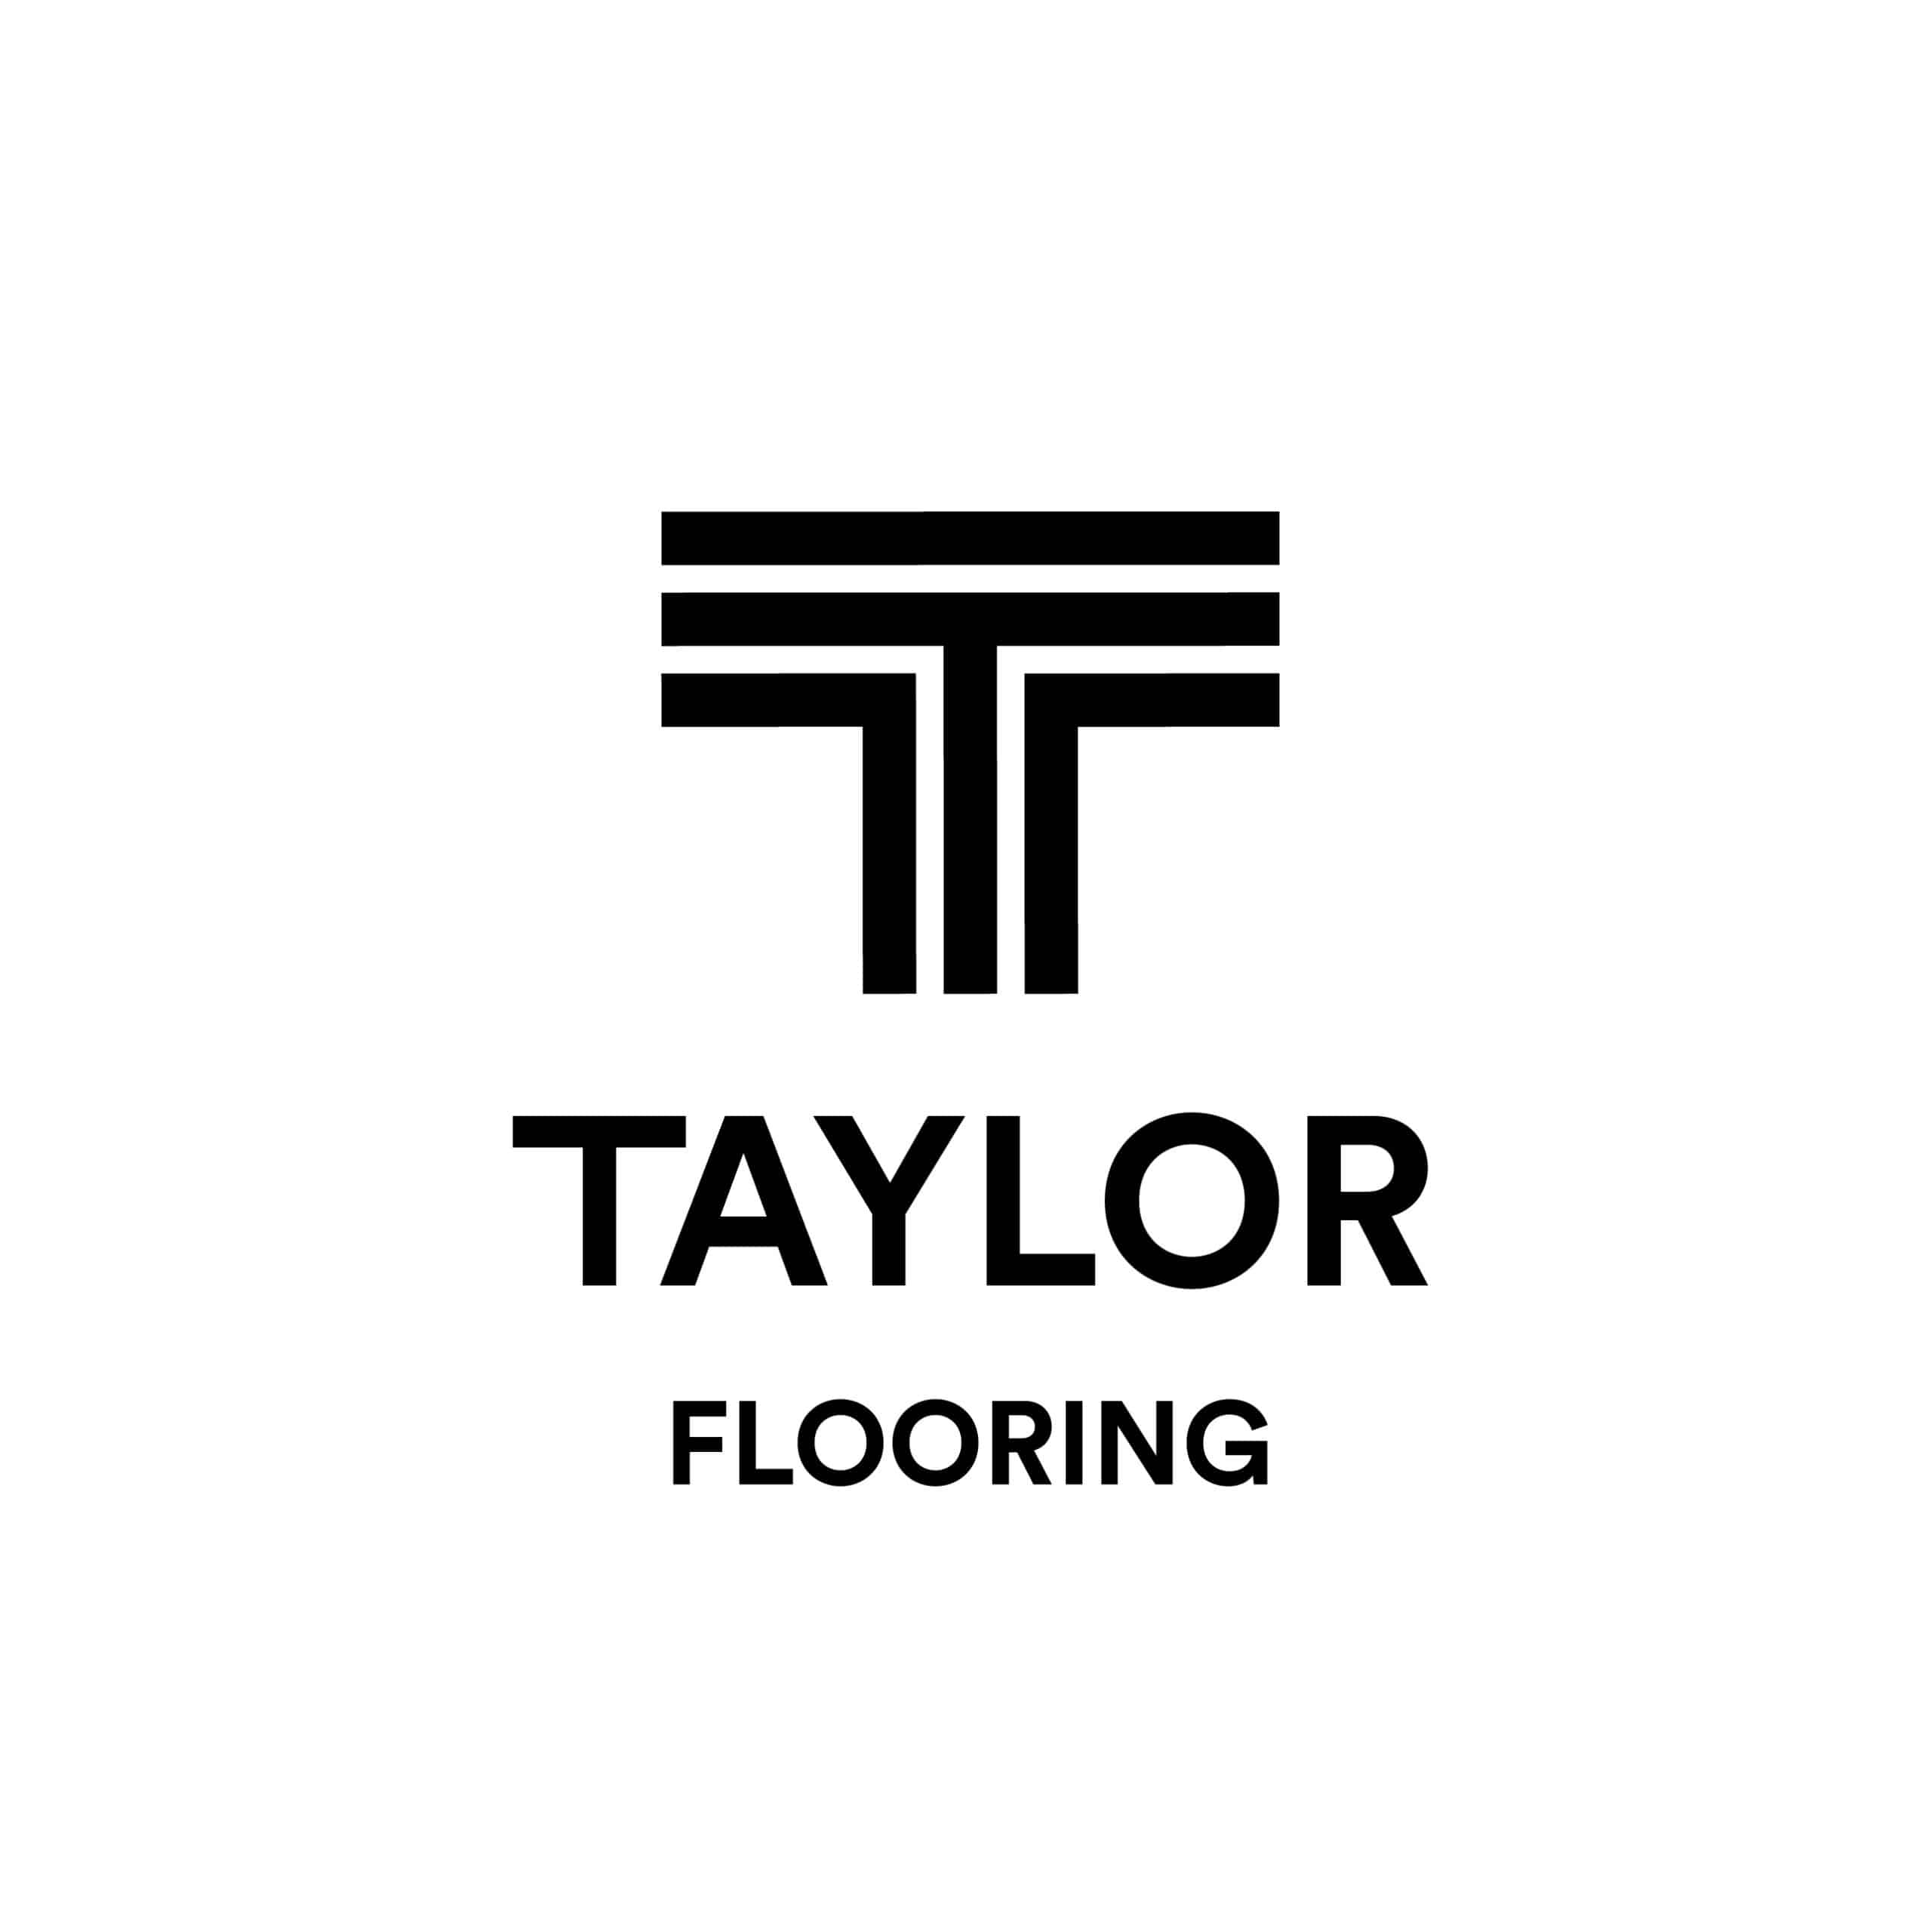 Taylor Flooring Logo Design 70's inspired surf logo by Stellen Design Branding Agency in Los Angeles CA